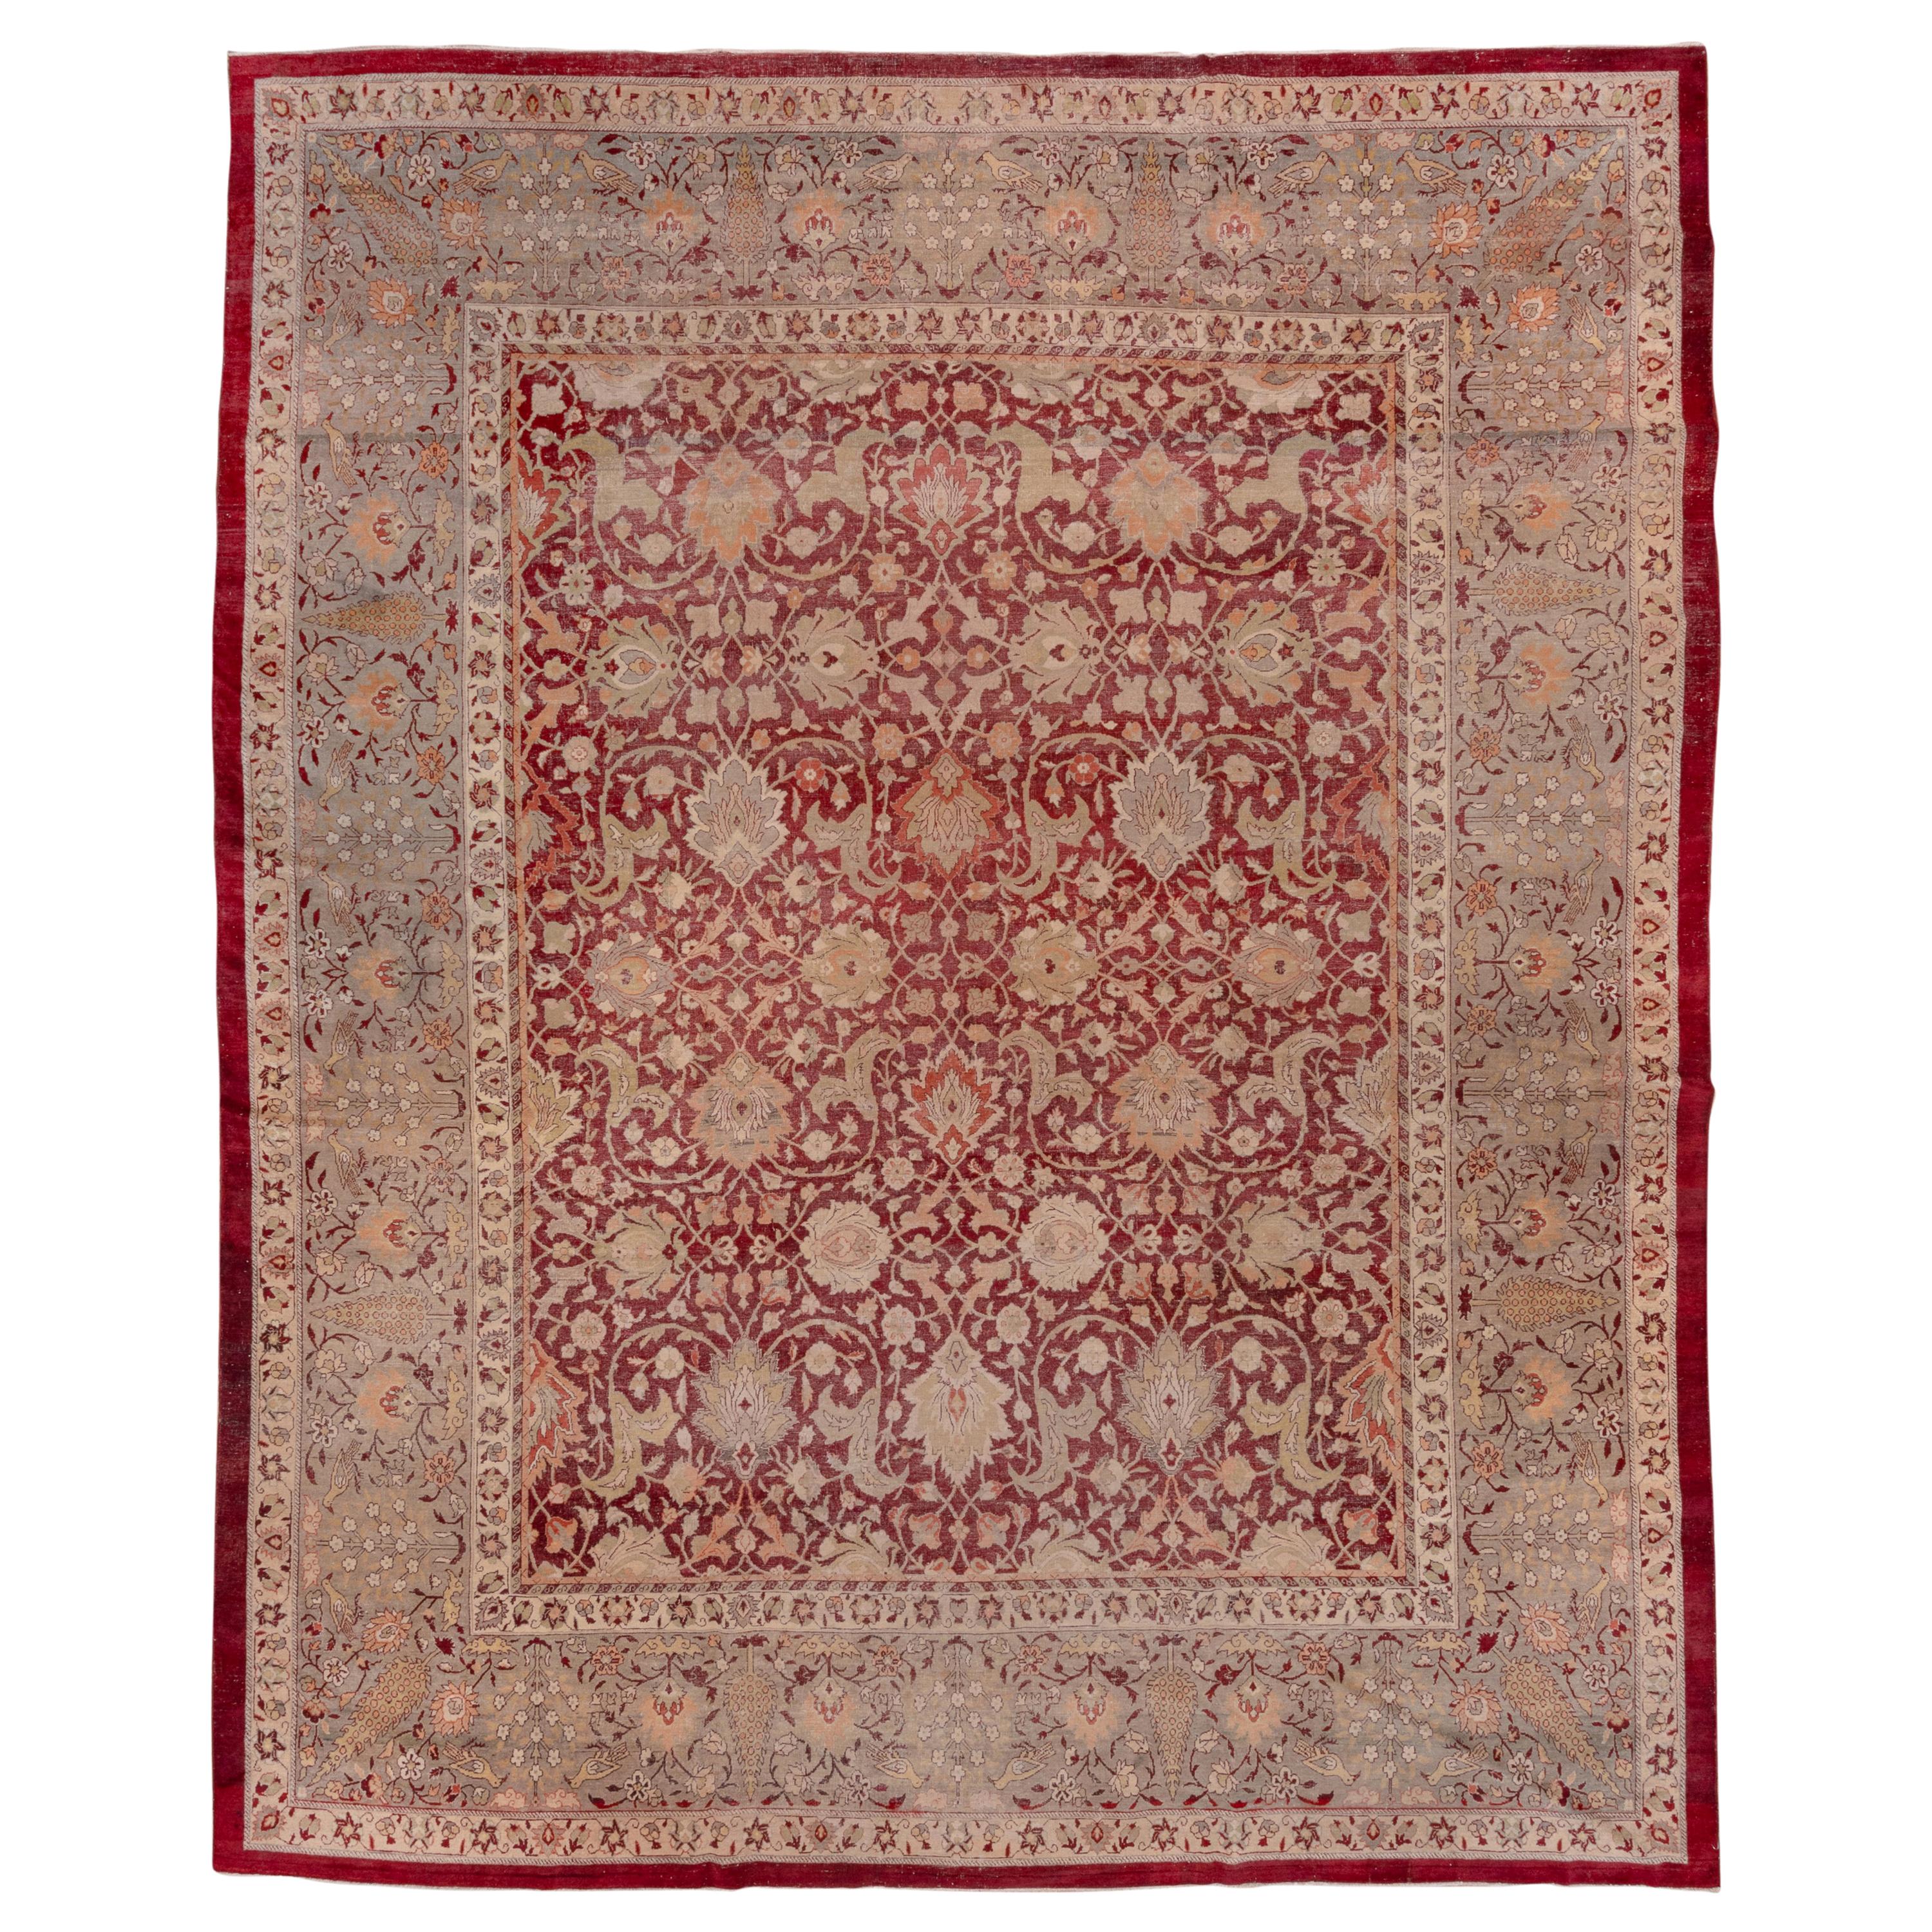 Antique Indian Amritzar Carpet, Burgundy Allover Field, Gray Borders